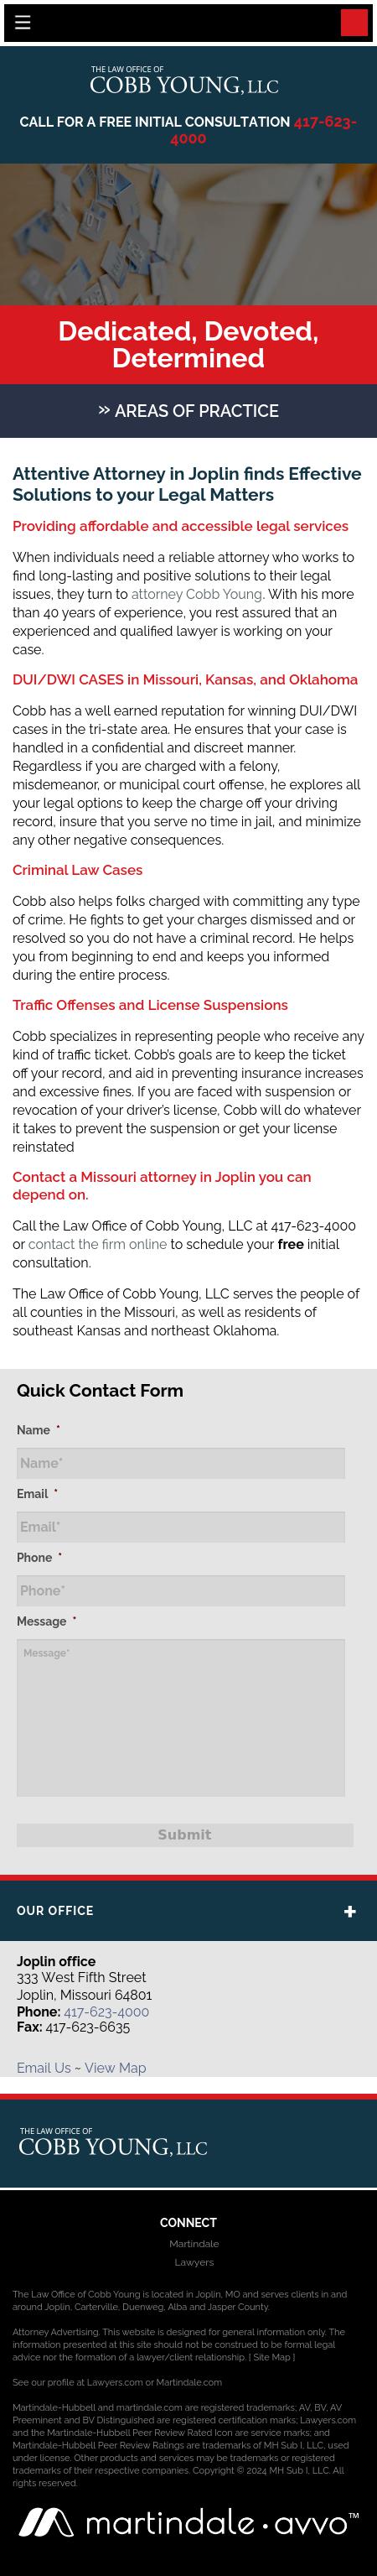 Law Office of Cobb Young, LLC - Joplin MO Lawyers